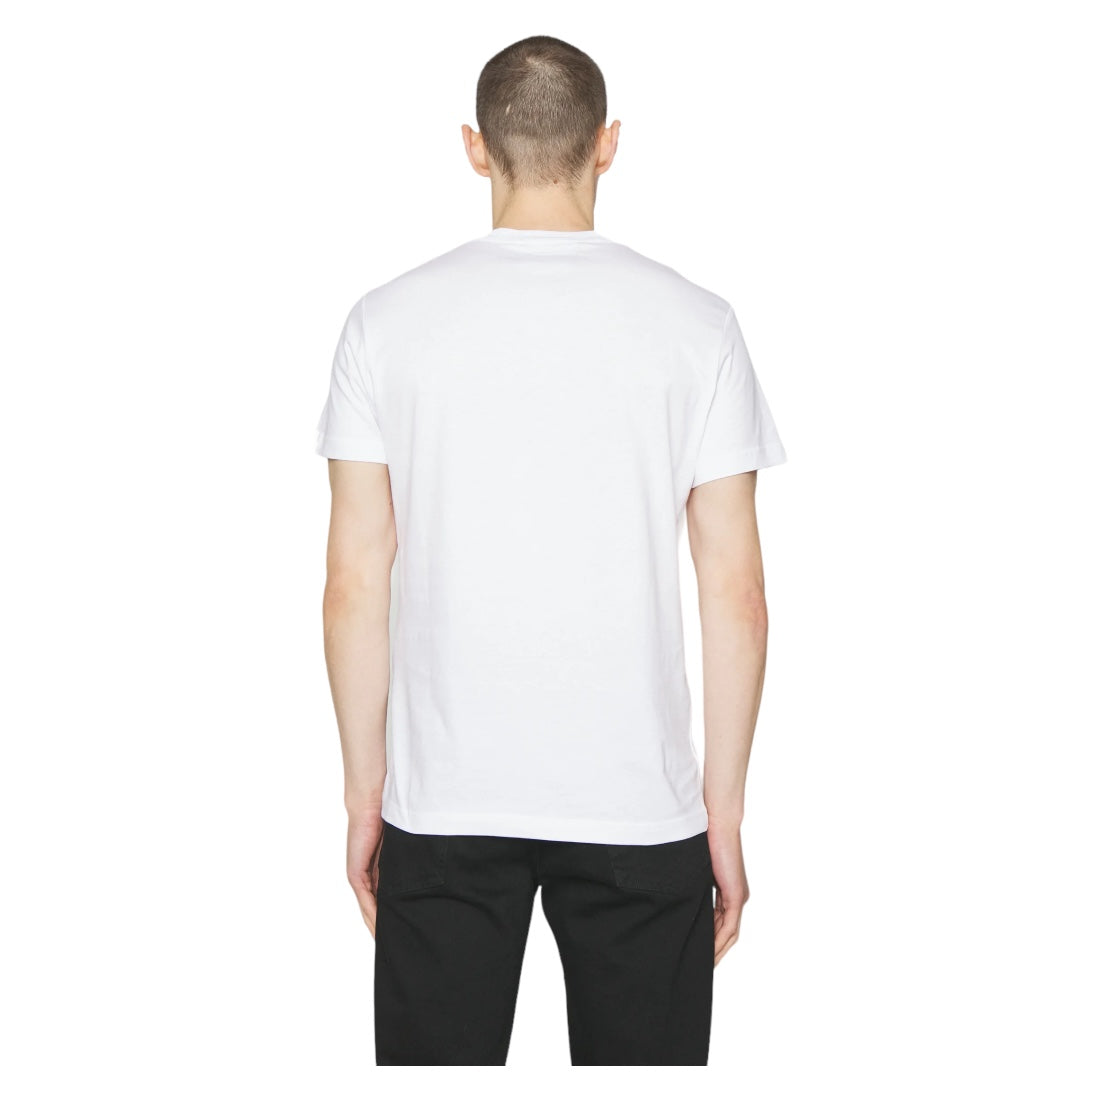 Versace Jeans Couture Logo Paksu folio T-paita Valkoinen